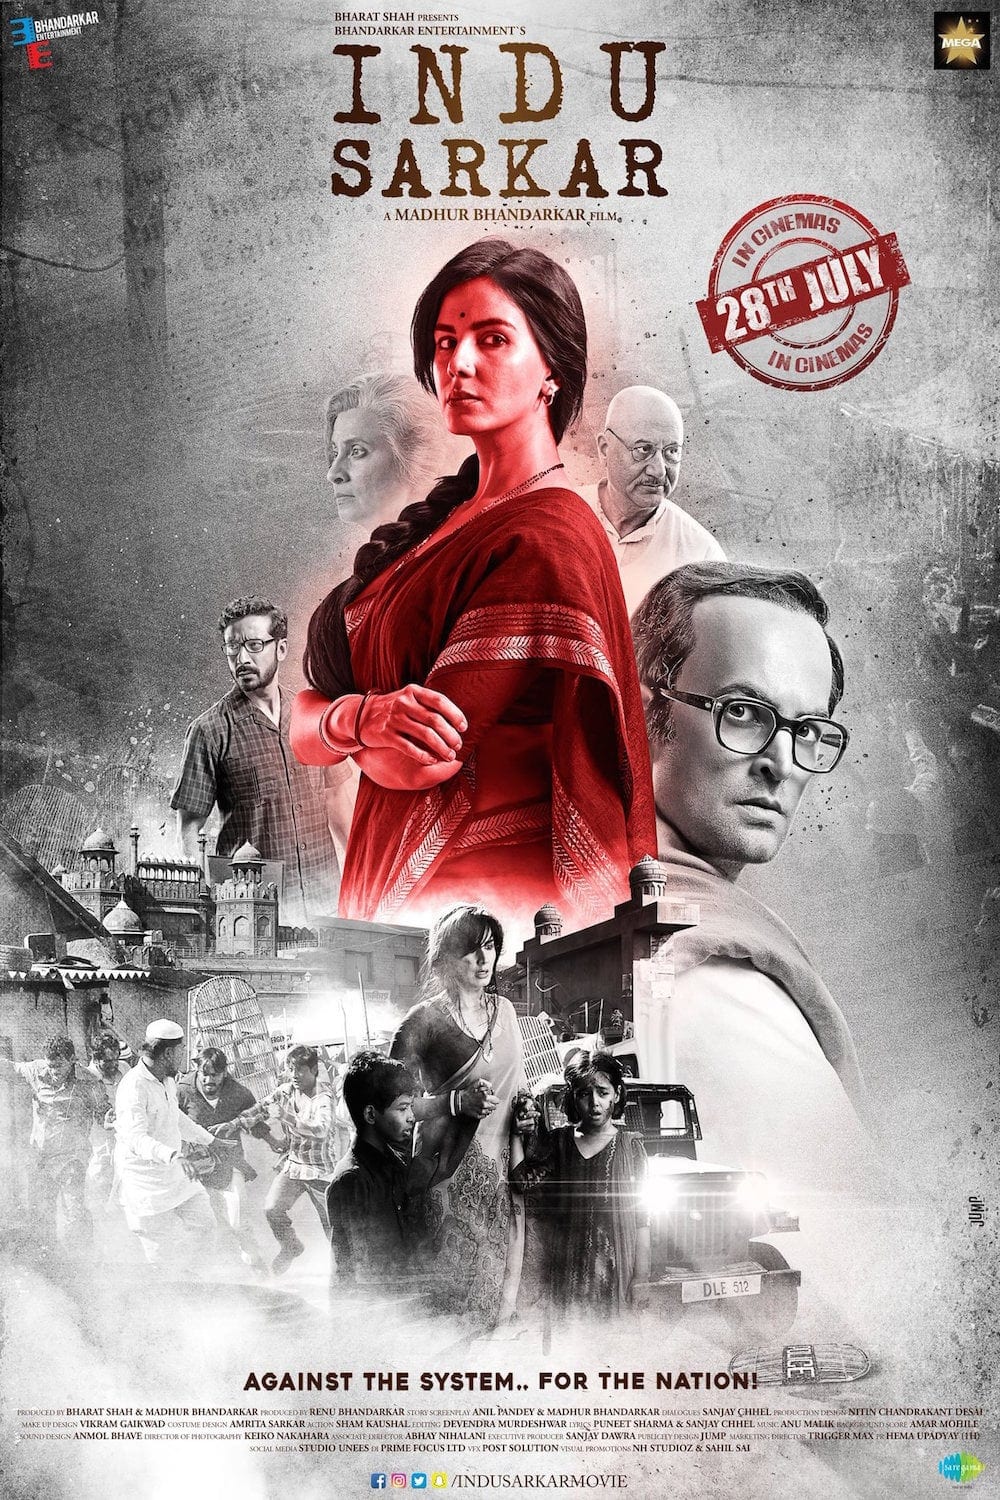 Poster for the movie "Indu Sarkar"